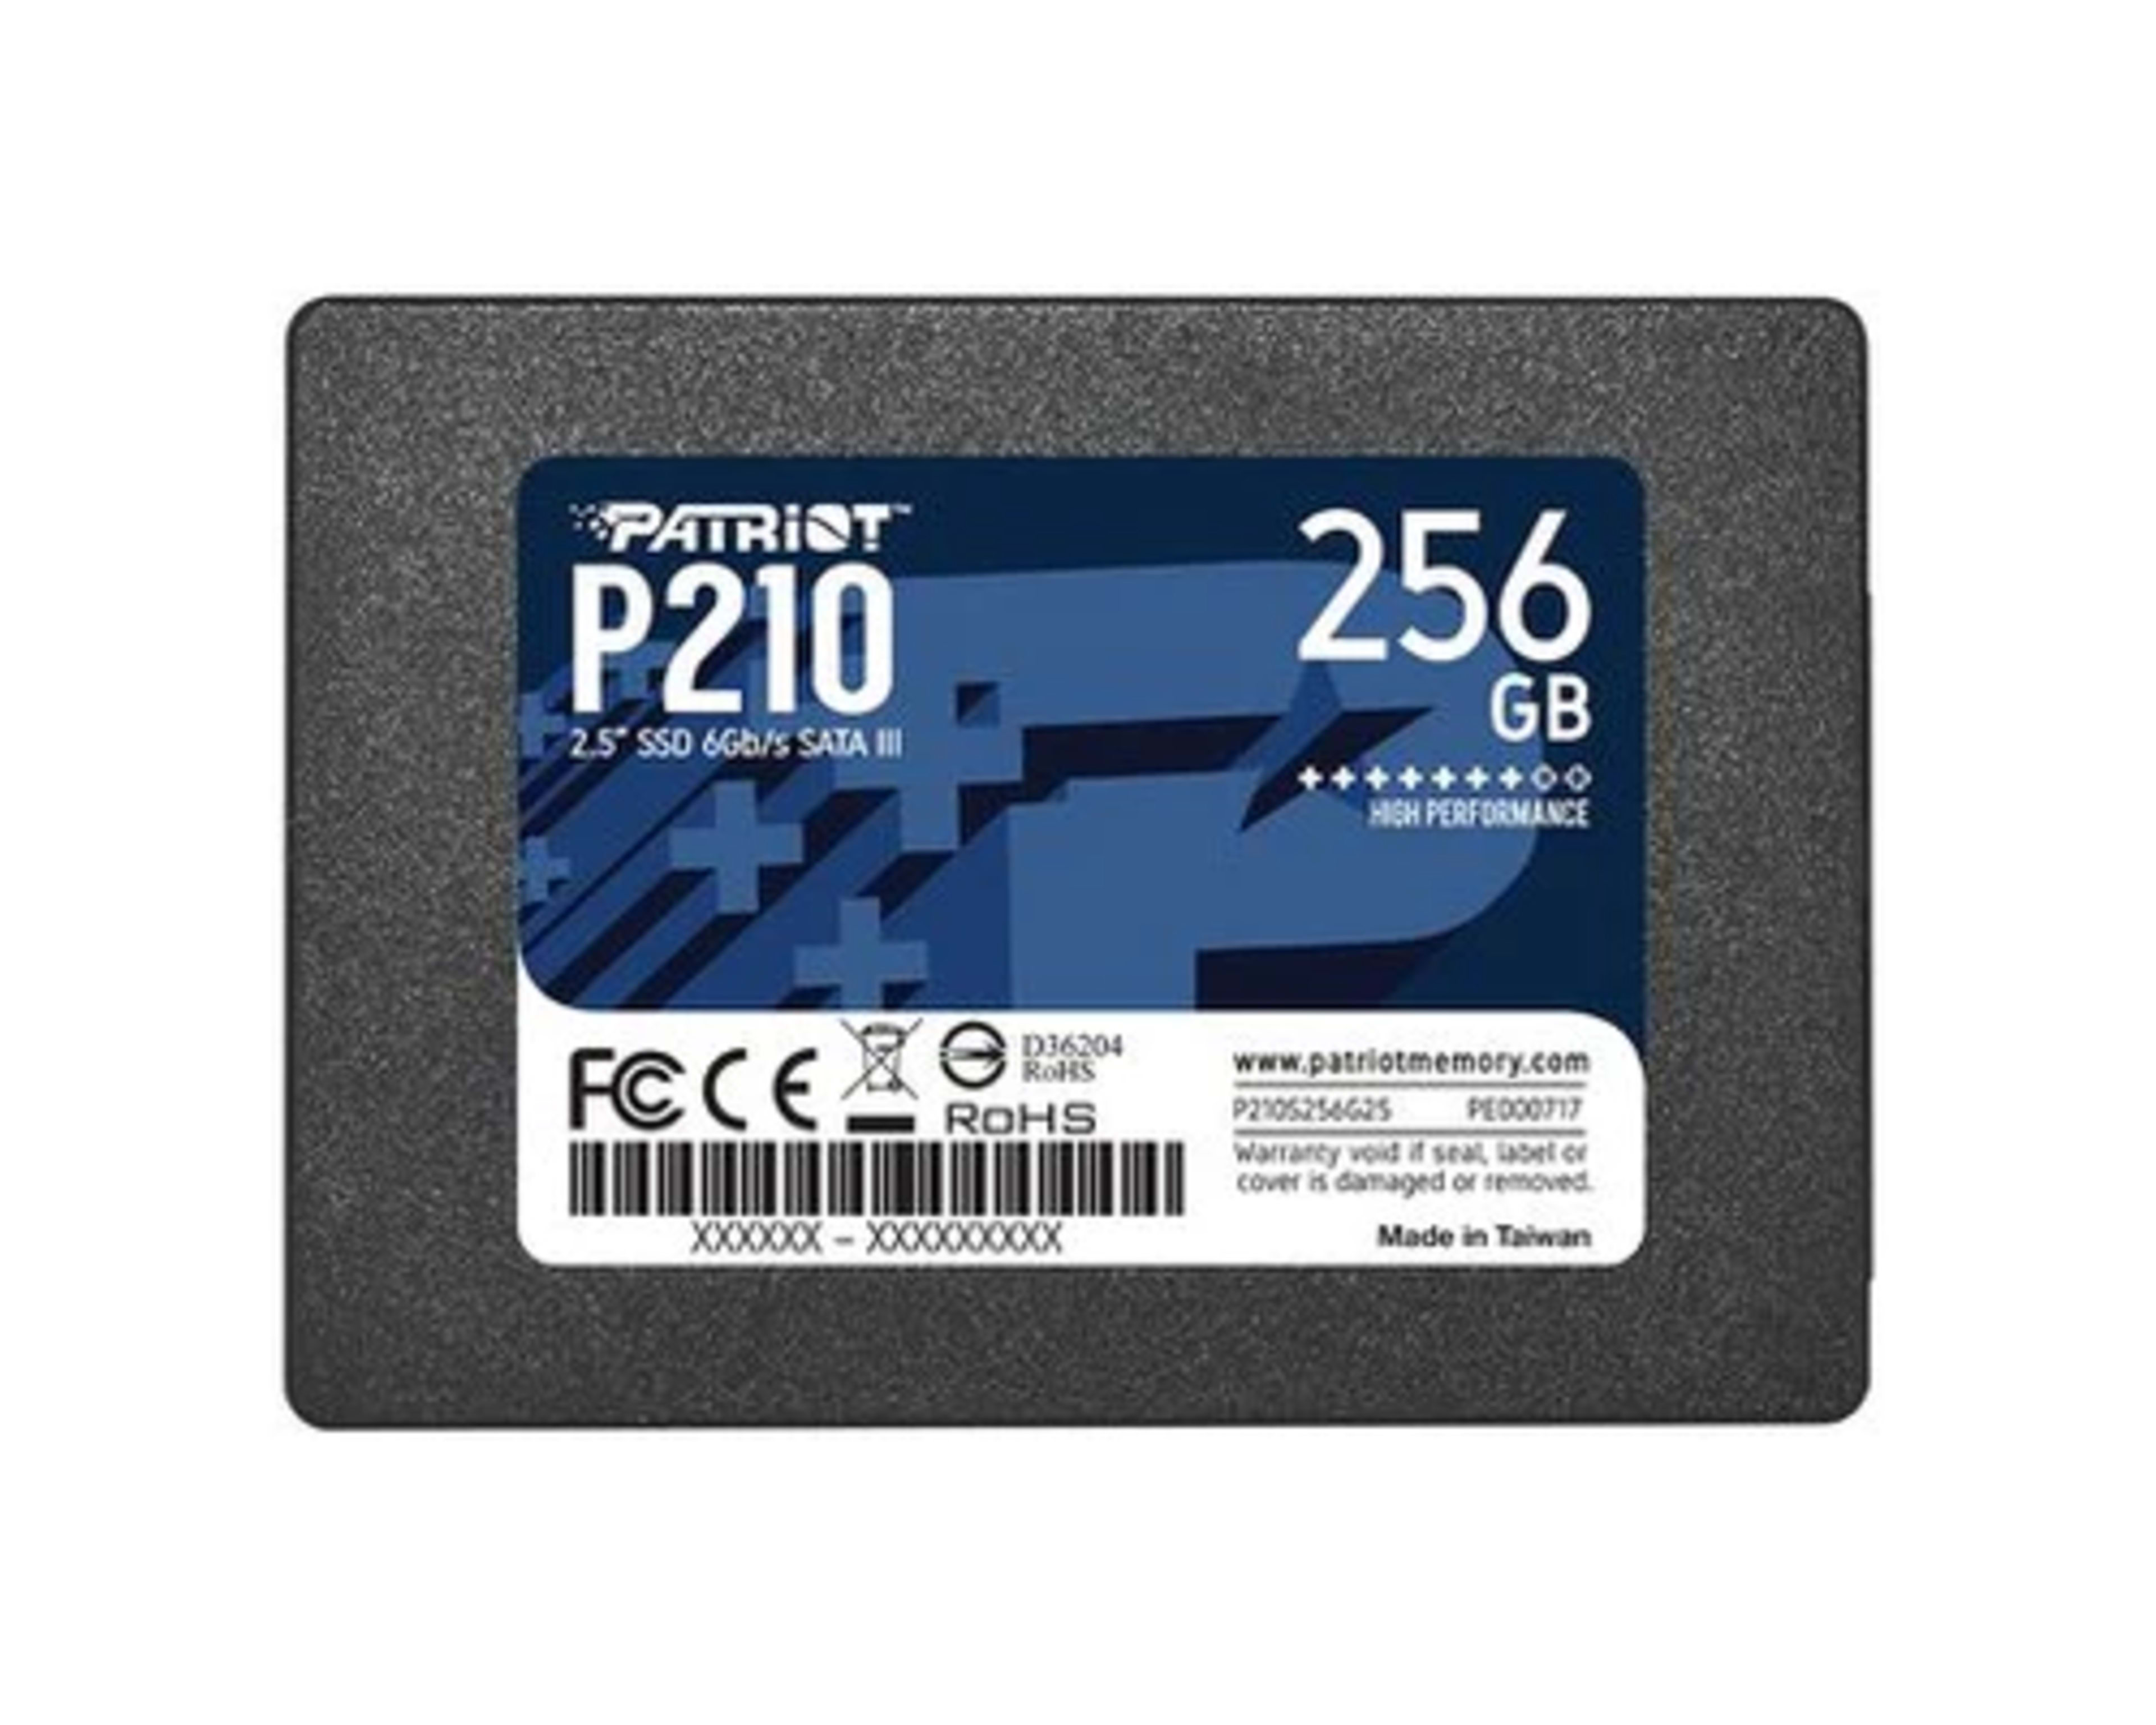 Patriot P210 256GB Internal SSD - SATA 3 2.5" - Solid State Drive